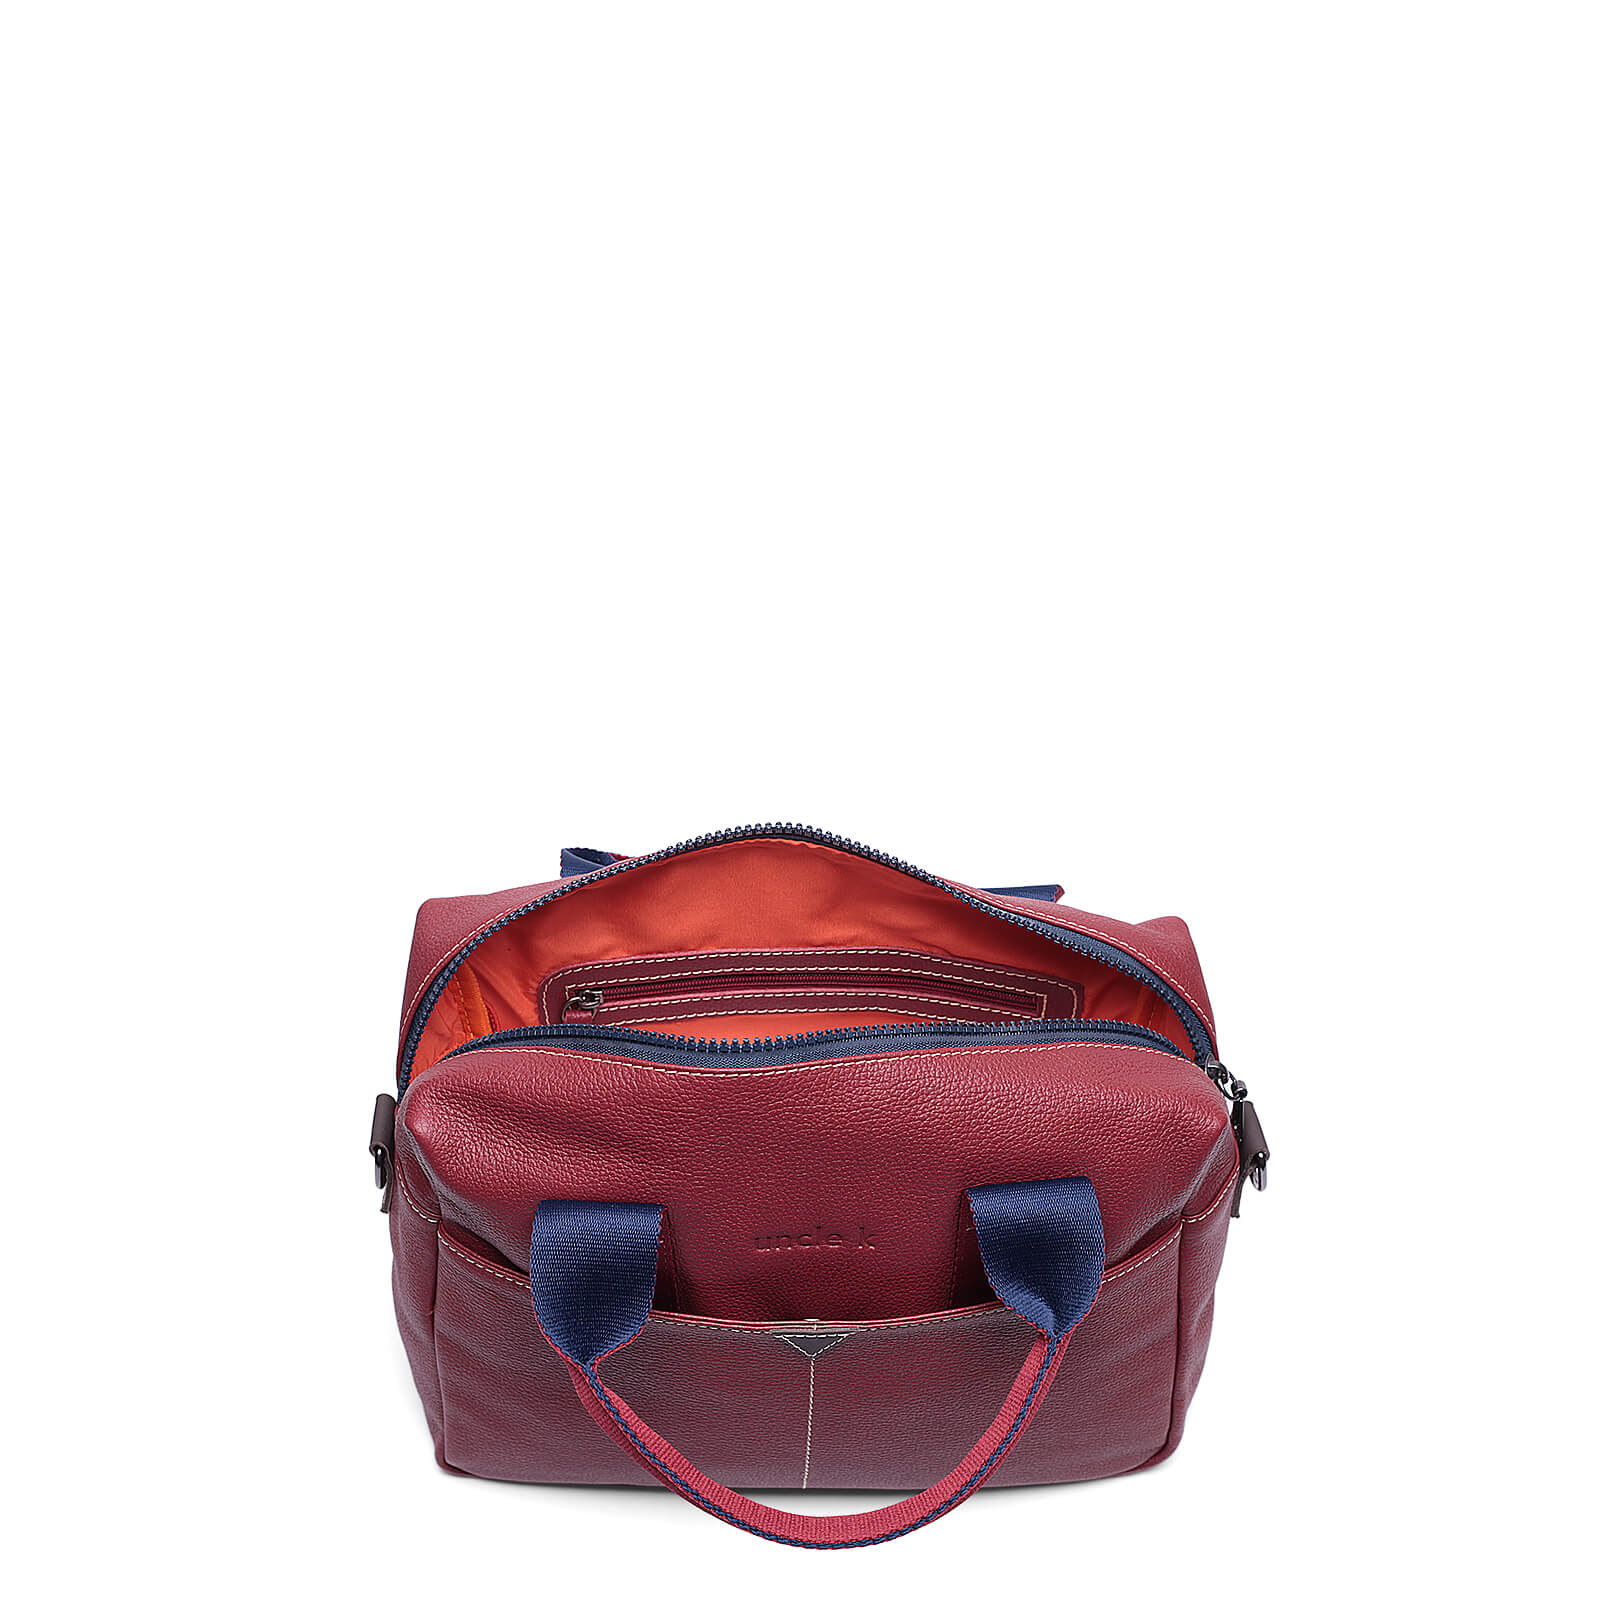 bolsa-multiuso-couro-61175-unclek-vermelho-4